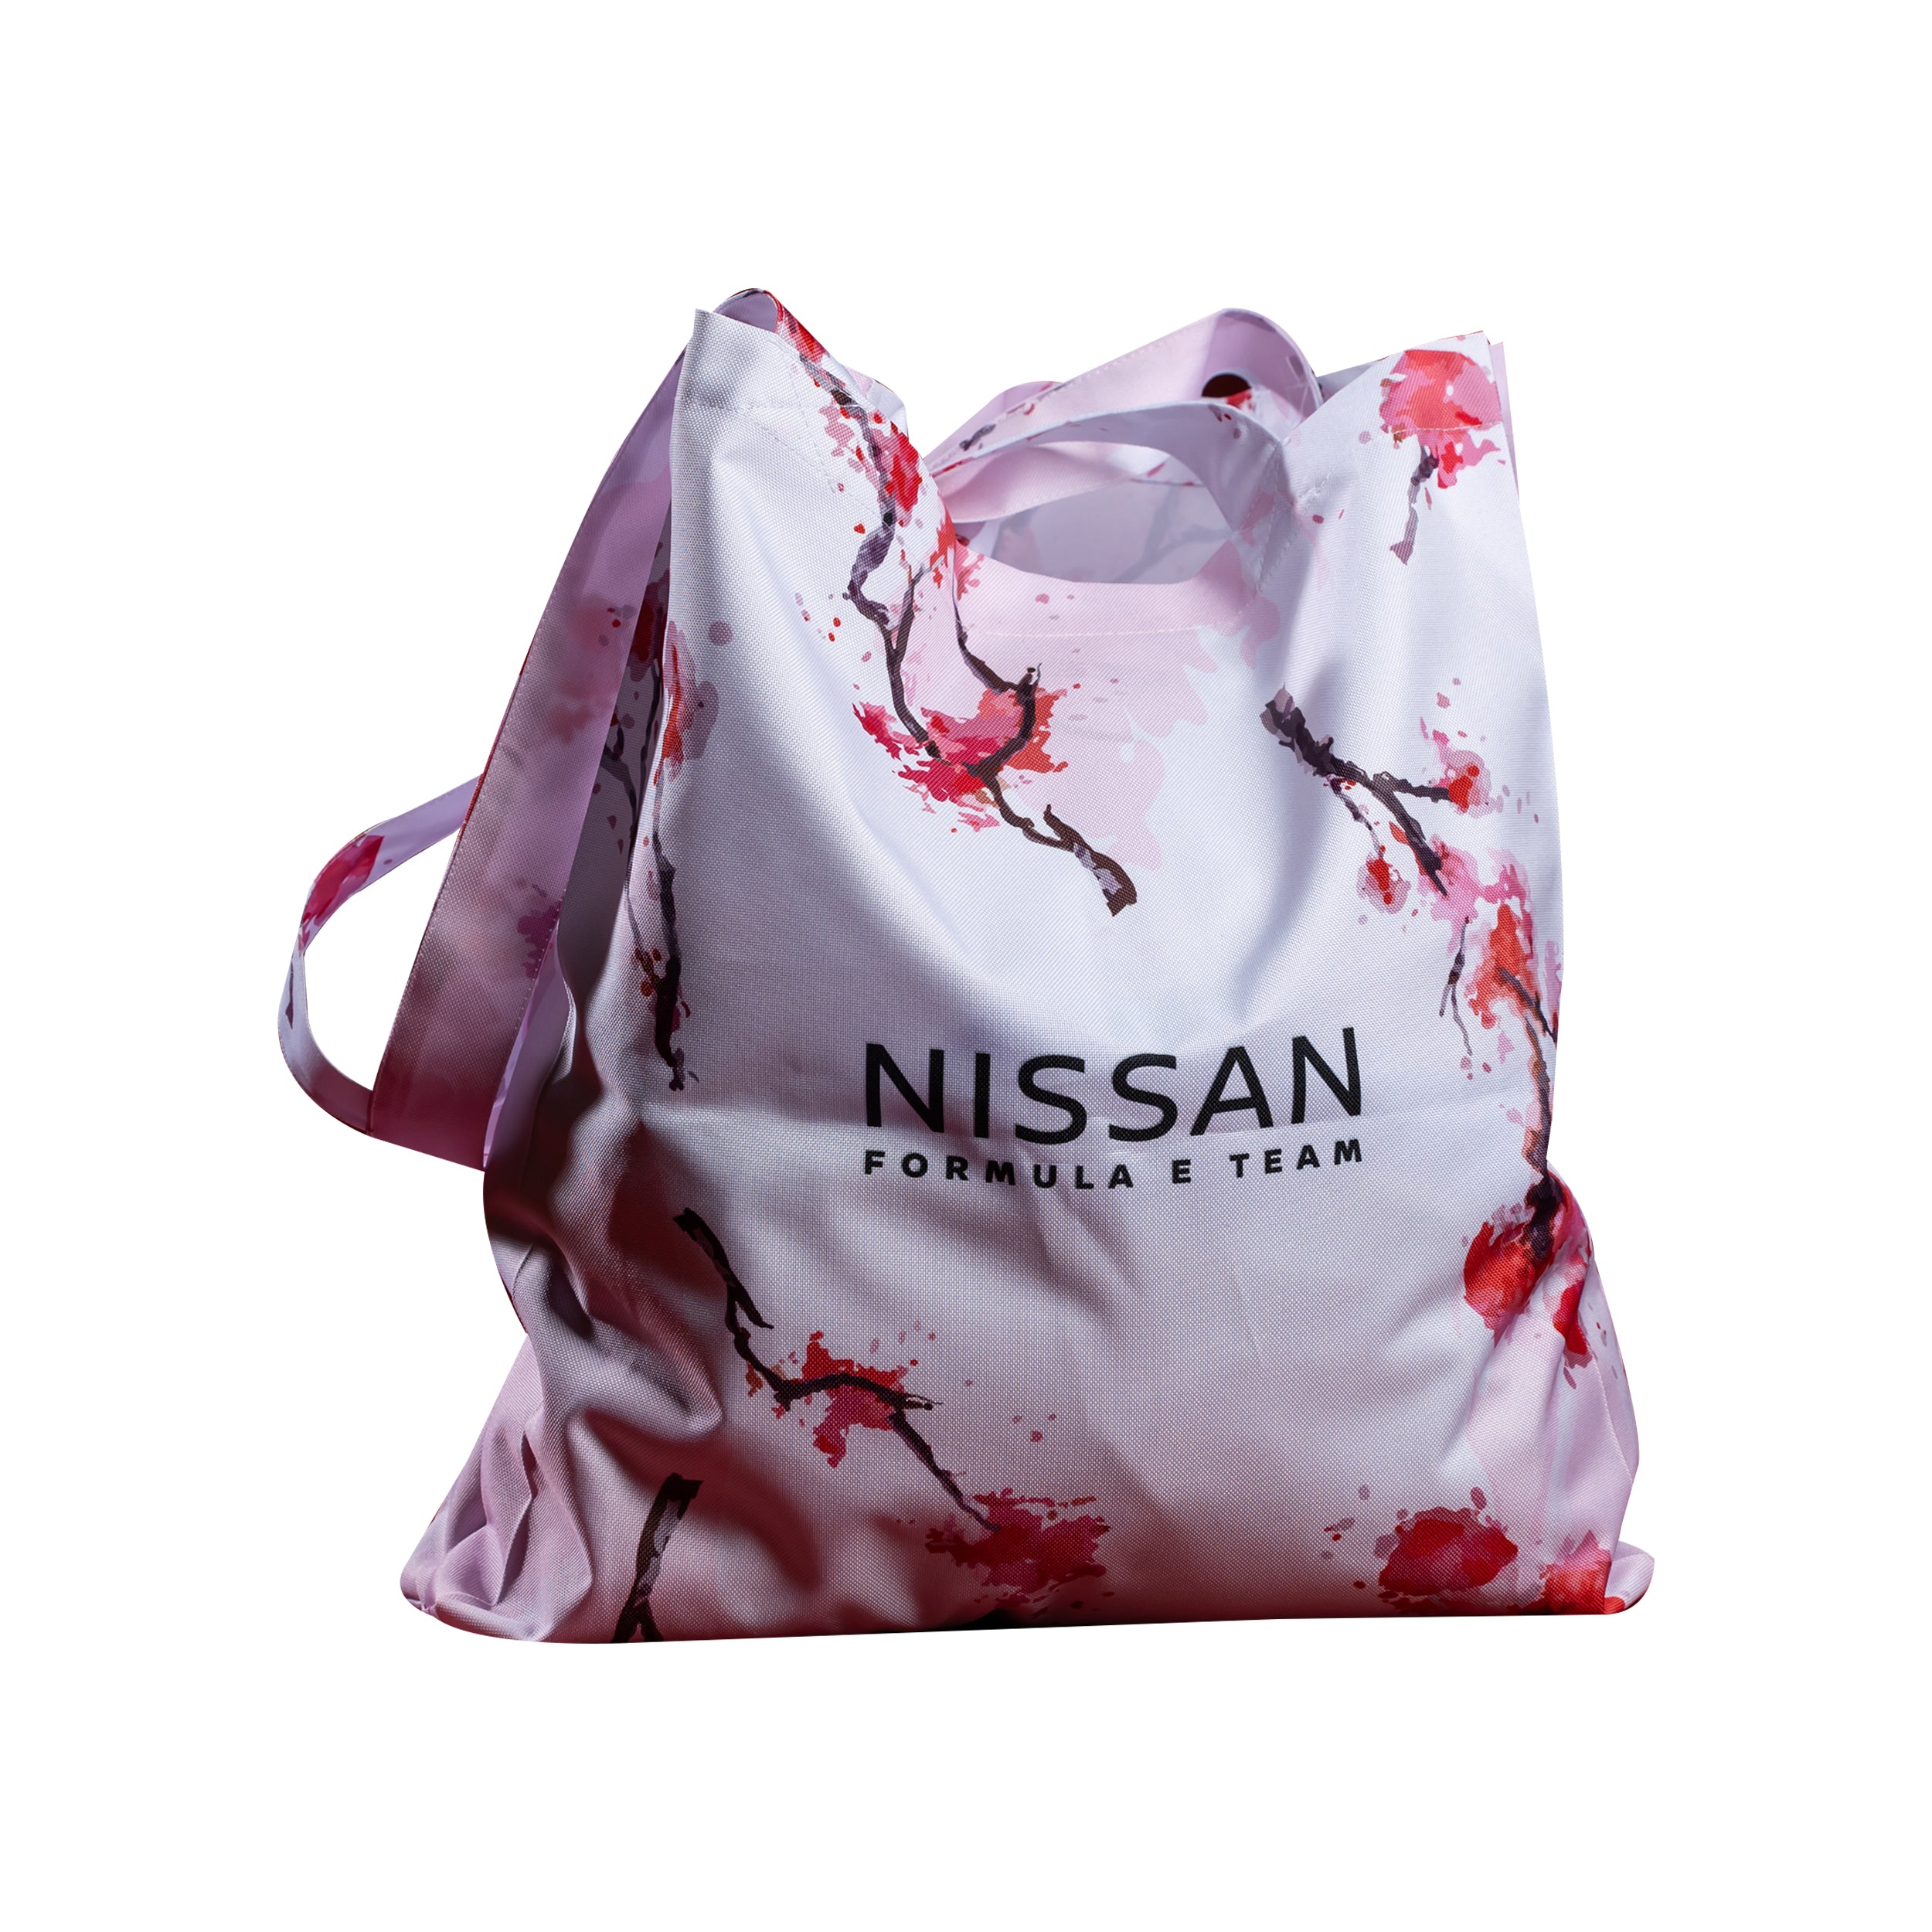 Nissan Formula E Team Sakura Tote Bag 13L